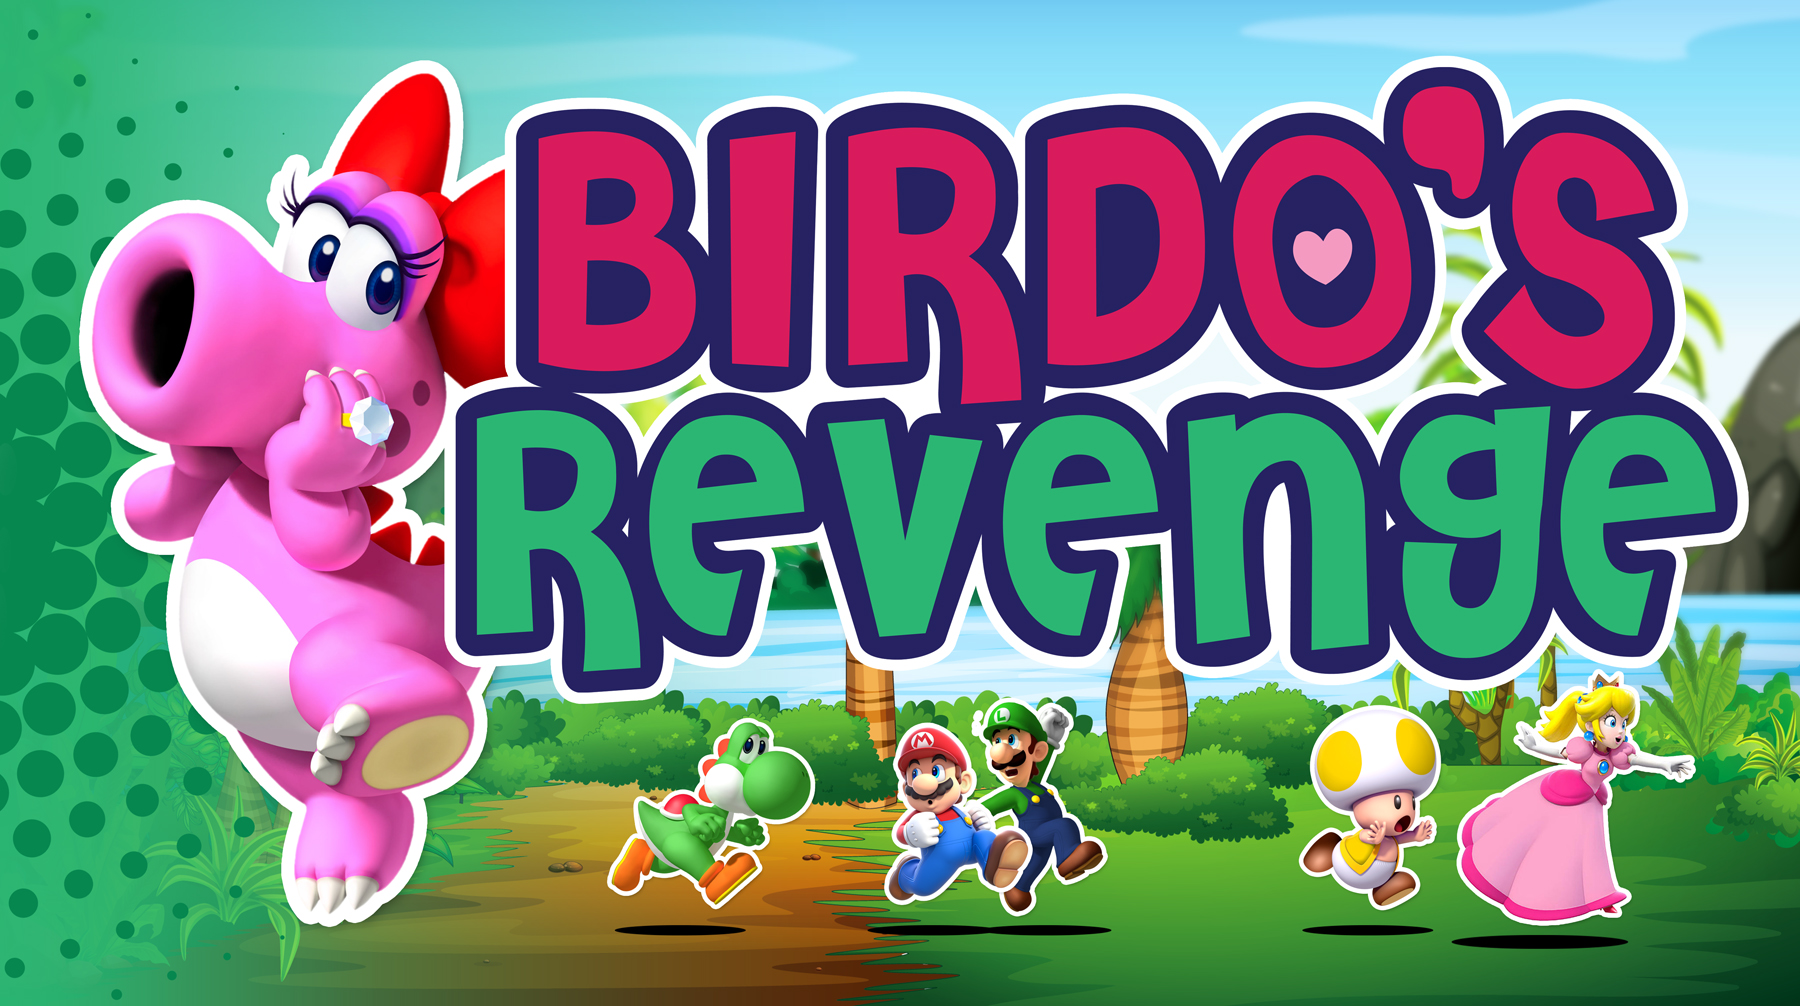 Birdo's Revenge